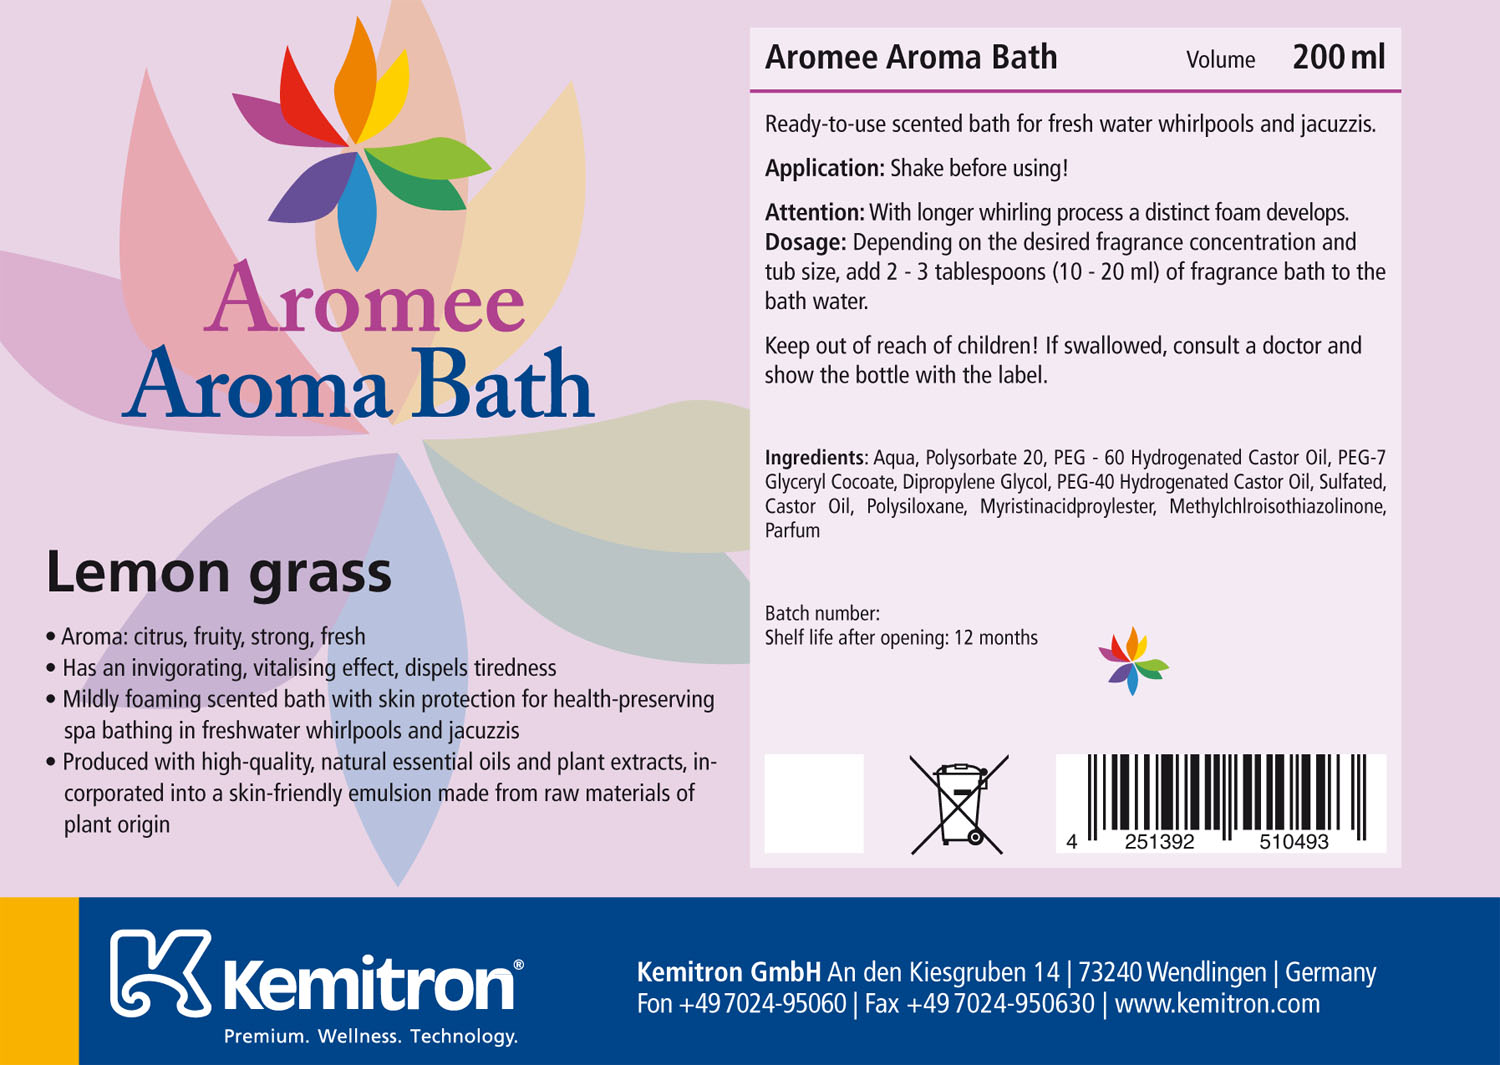 Aromee Aromabath "Lemon Grass"